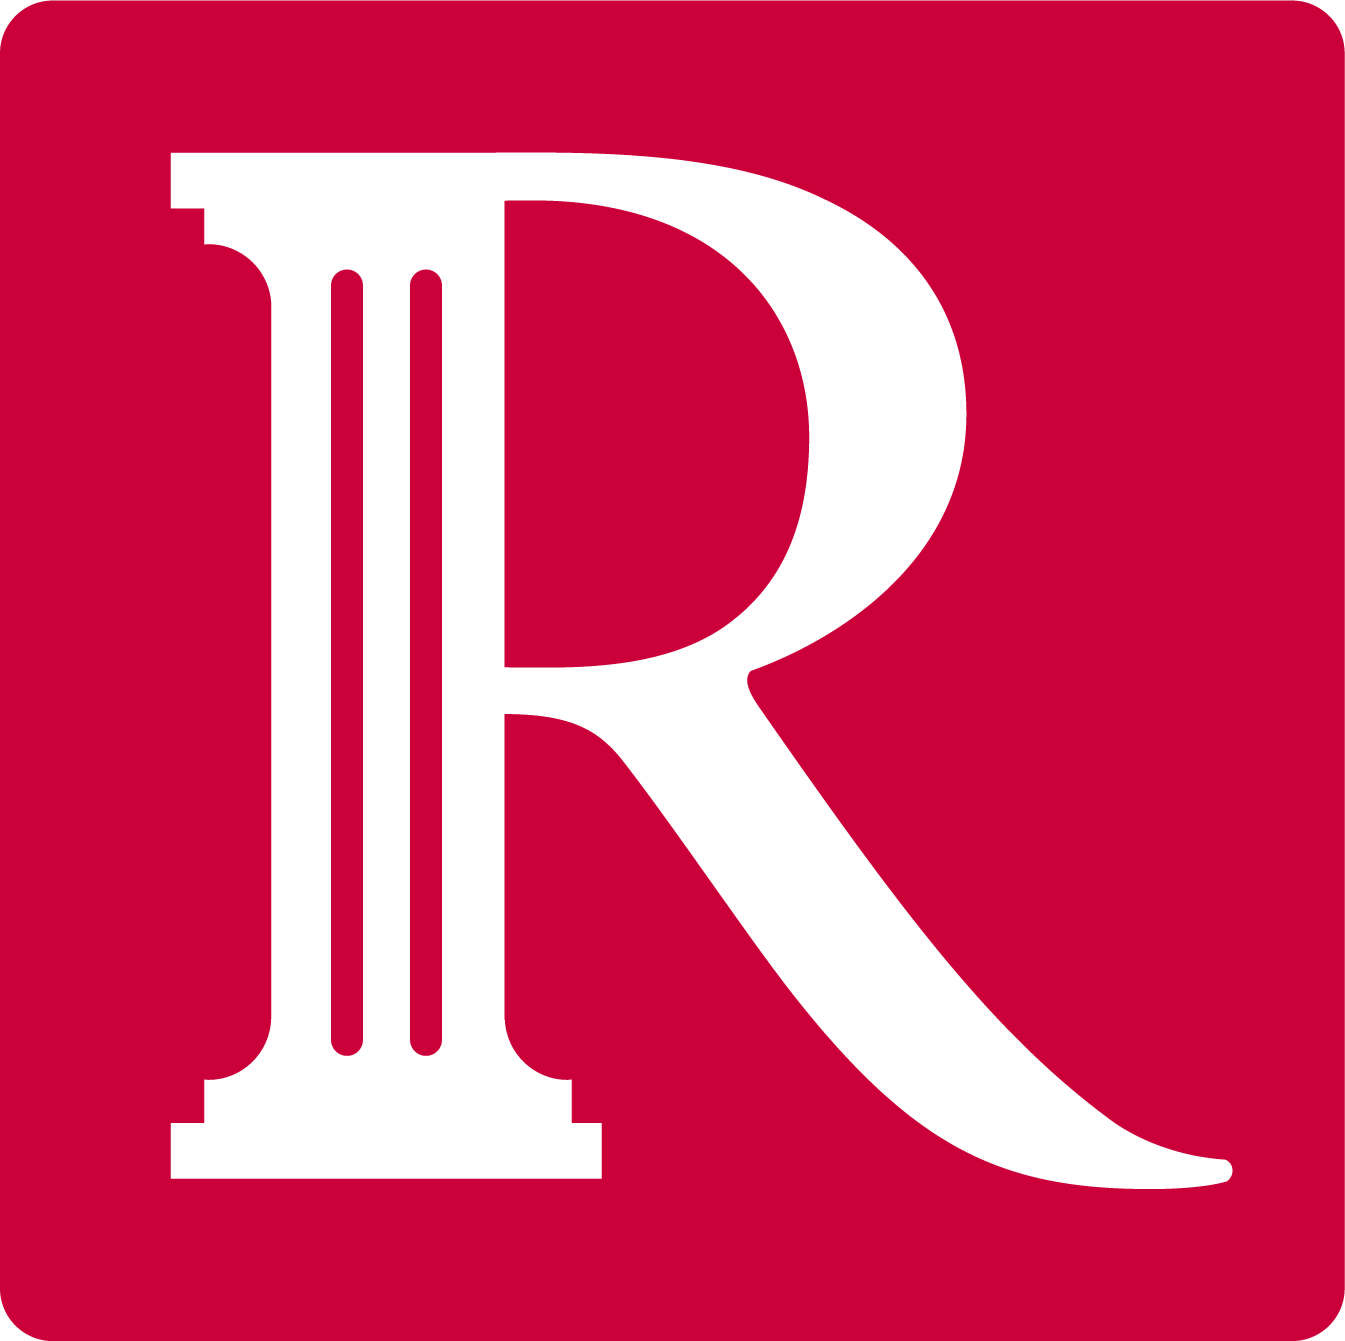 Renaissance Remodeling Logo